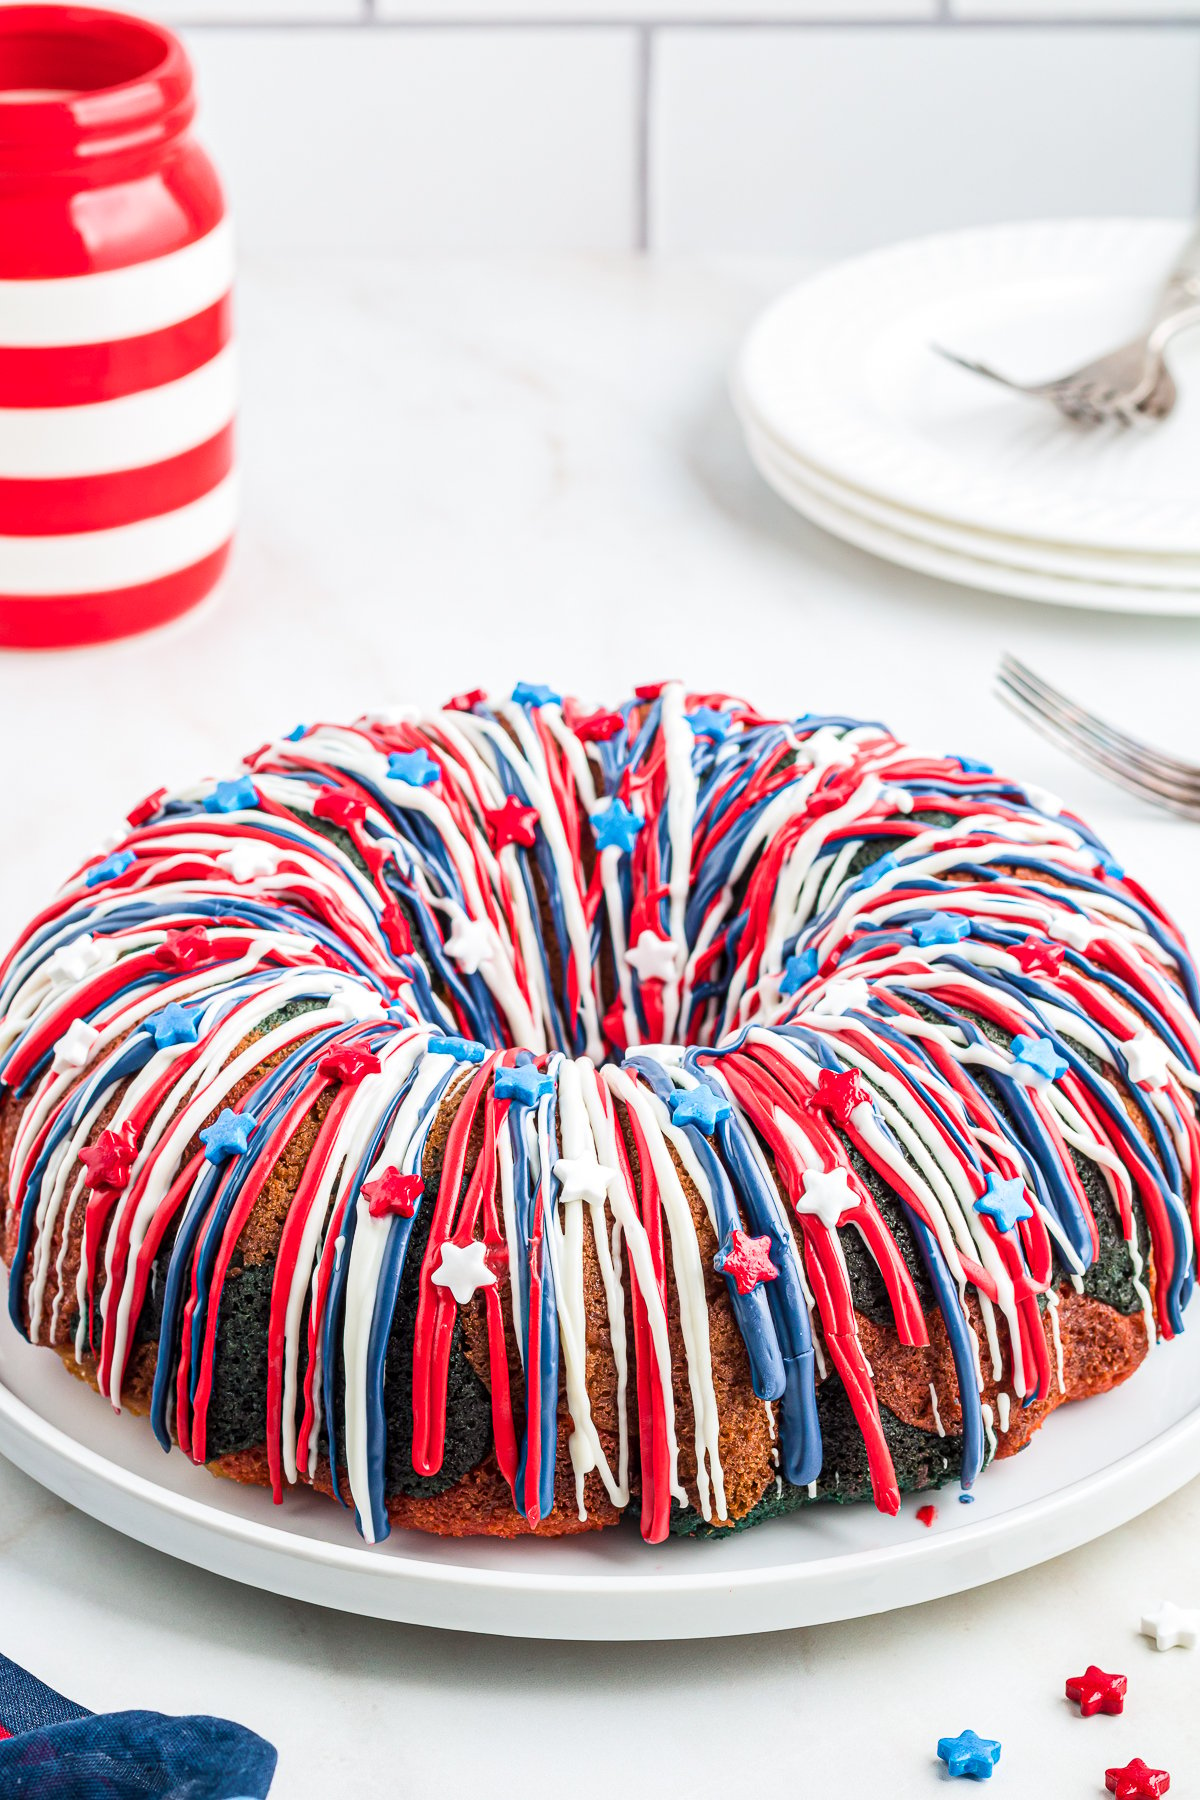 Finished Patriotic Bundt Cake decorated on cake plate.